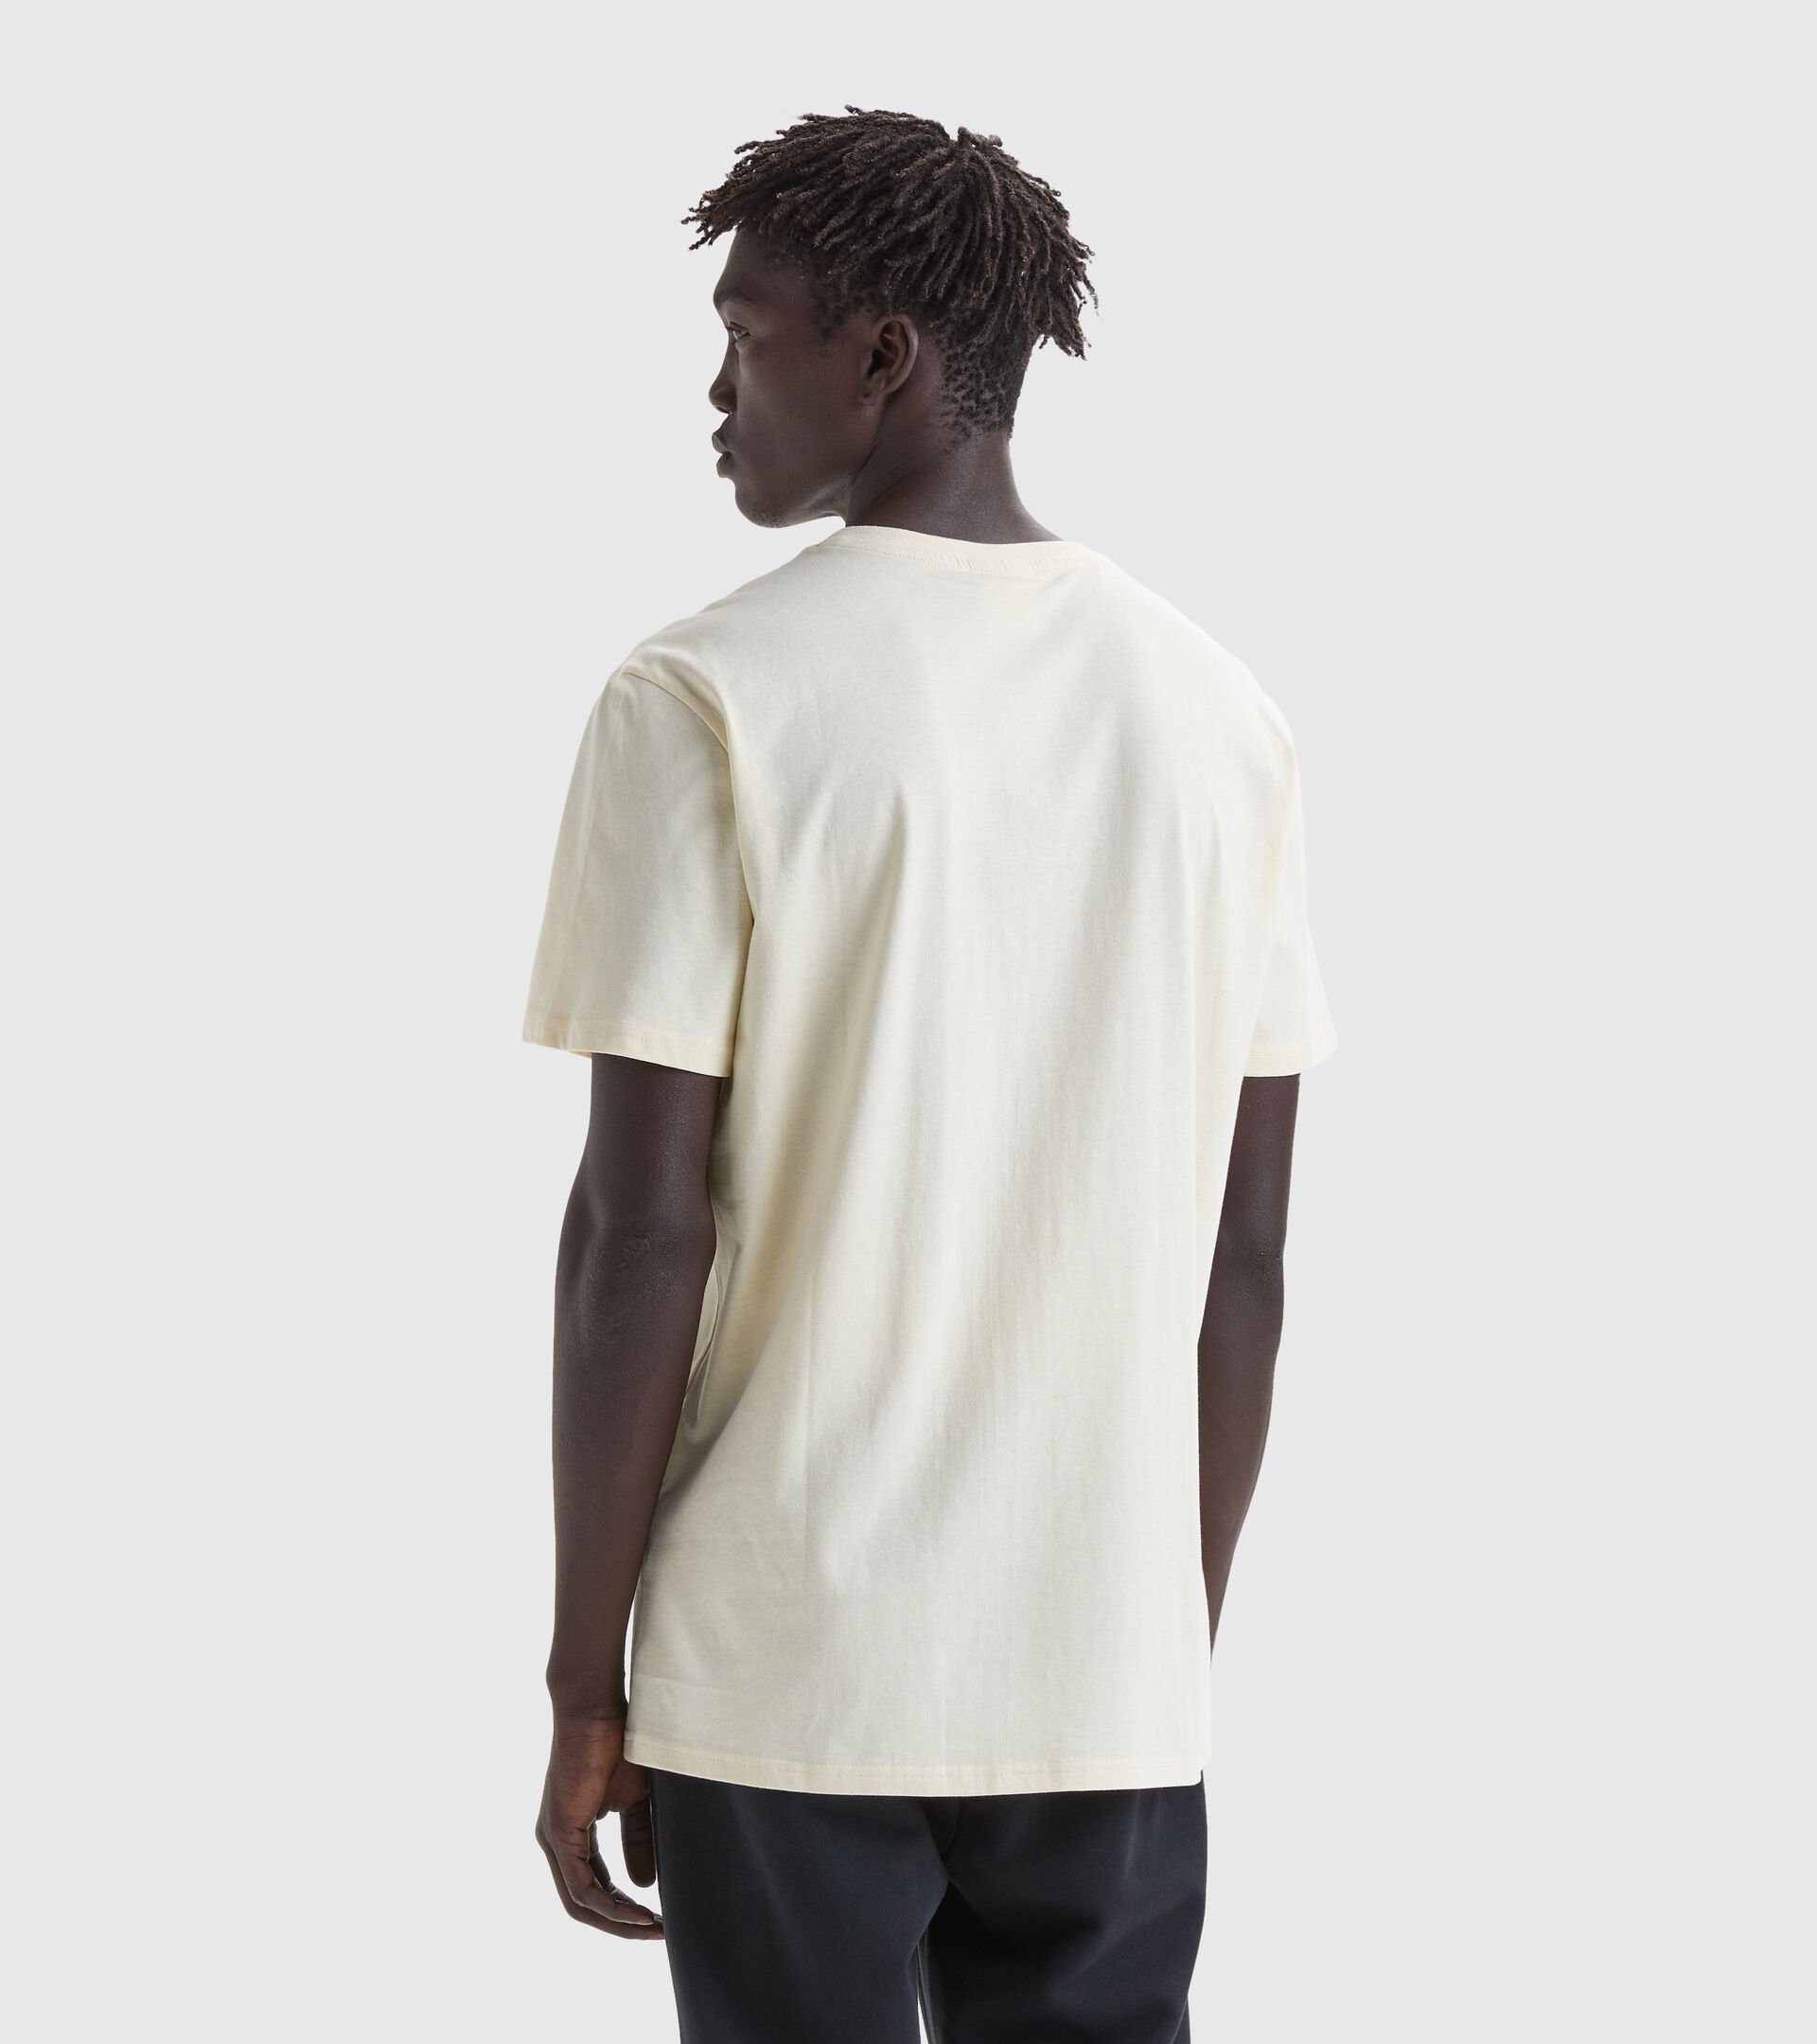 Sports T-shirt - Men’s T-SHIRT SS CORE ANTIQUE WHITE - Diadora